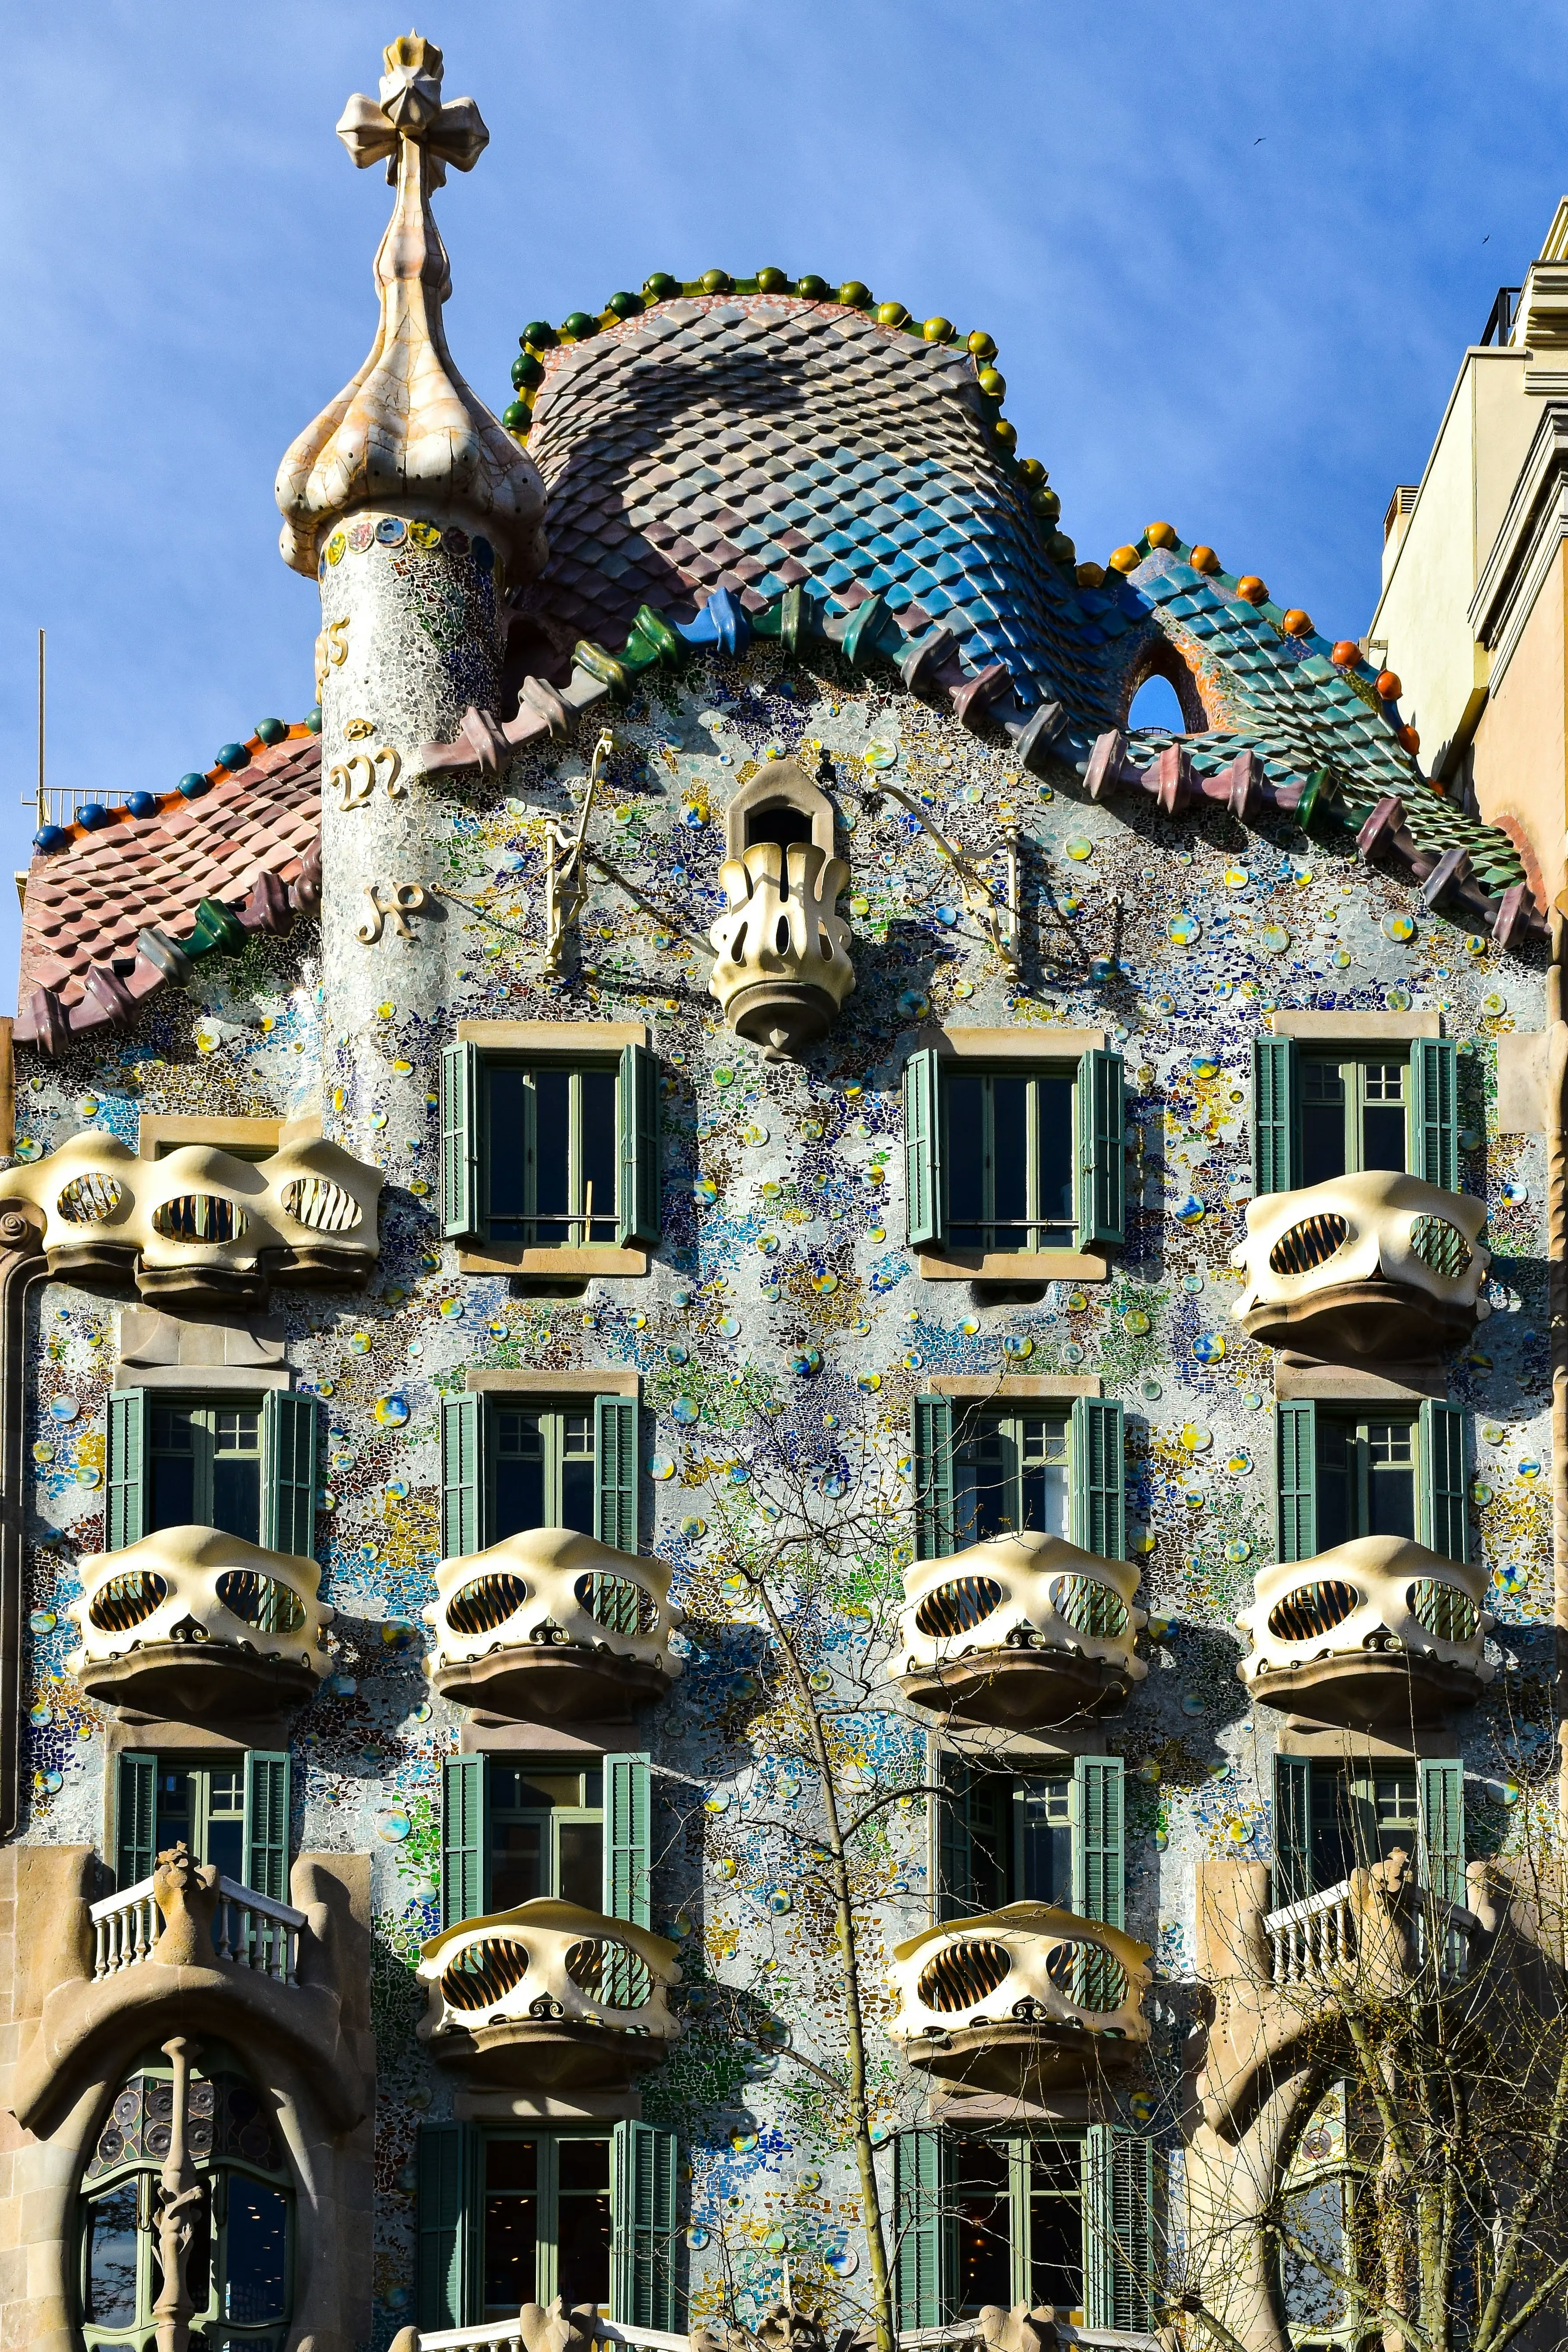 A Traveler's Guide To Casa Batlló